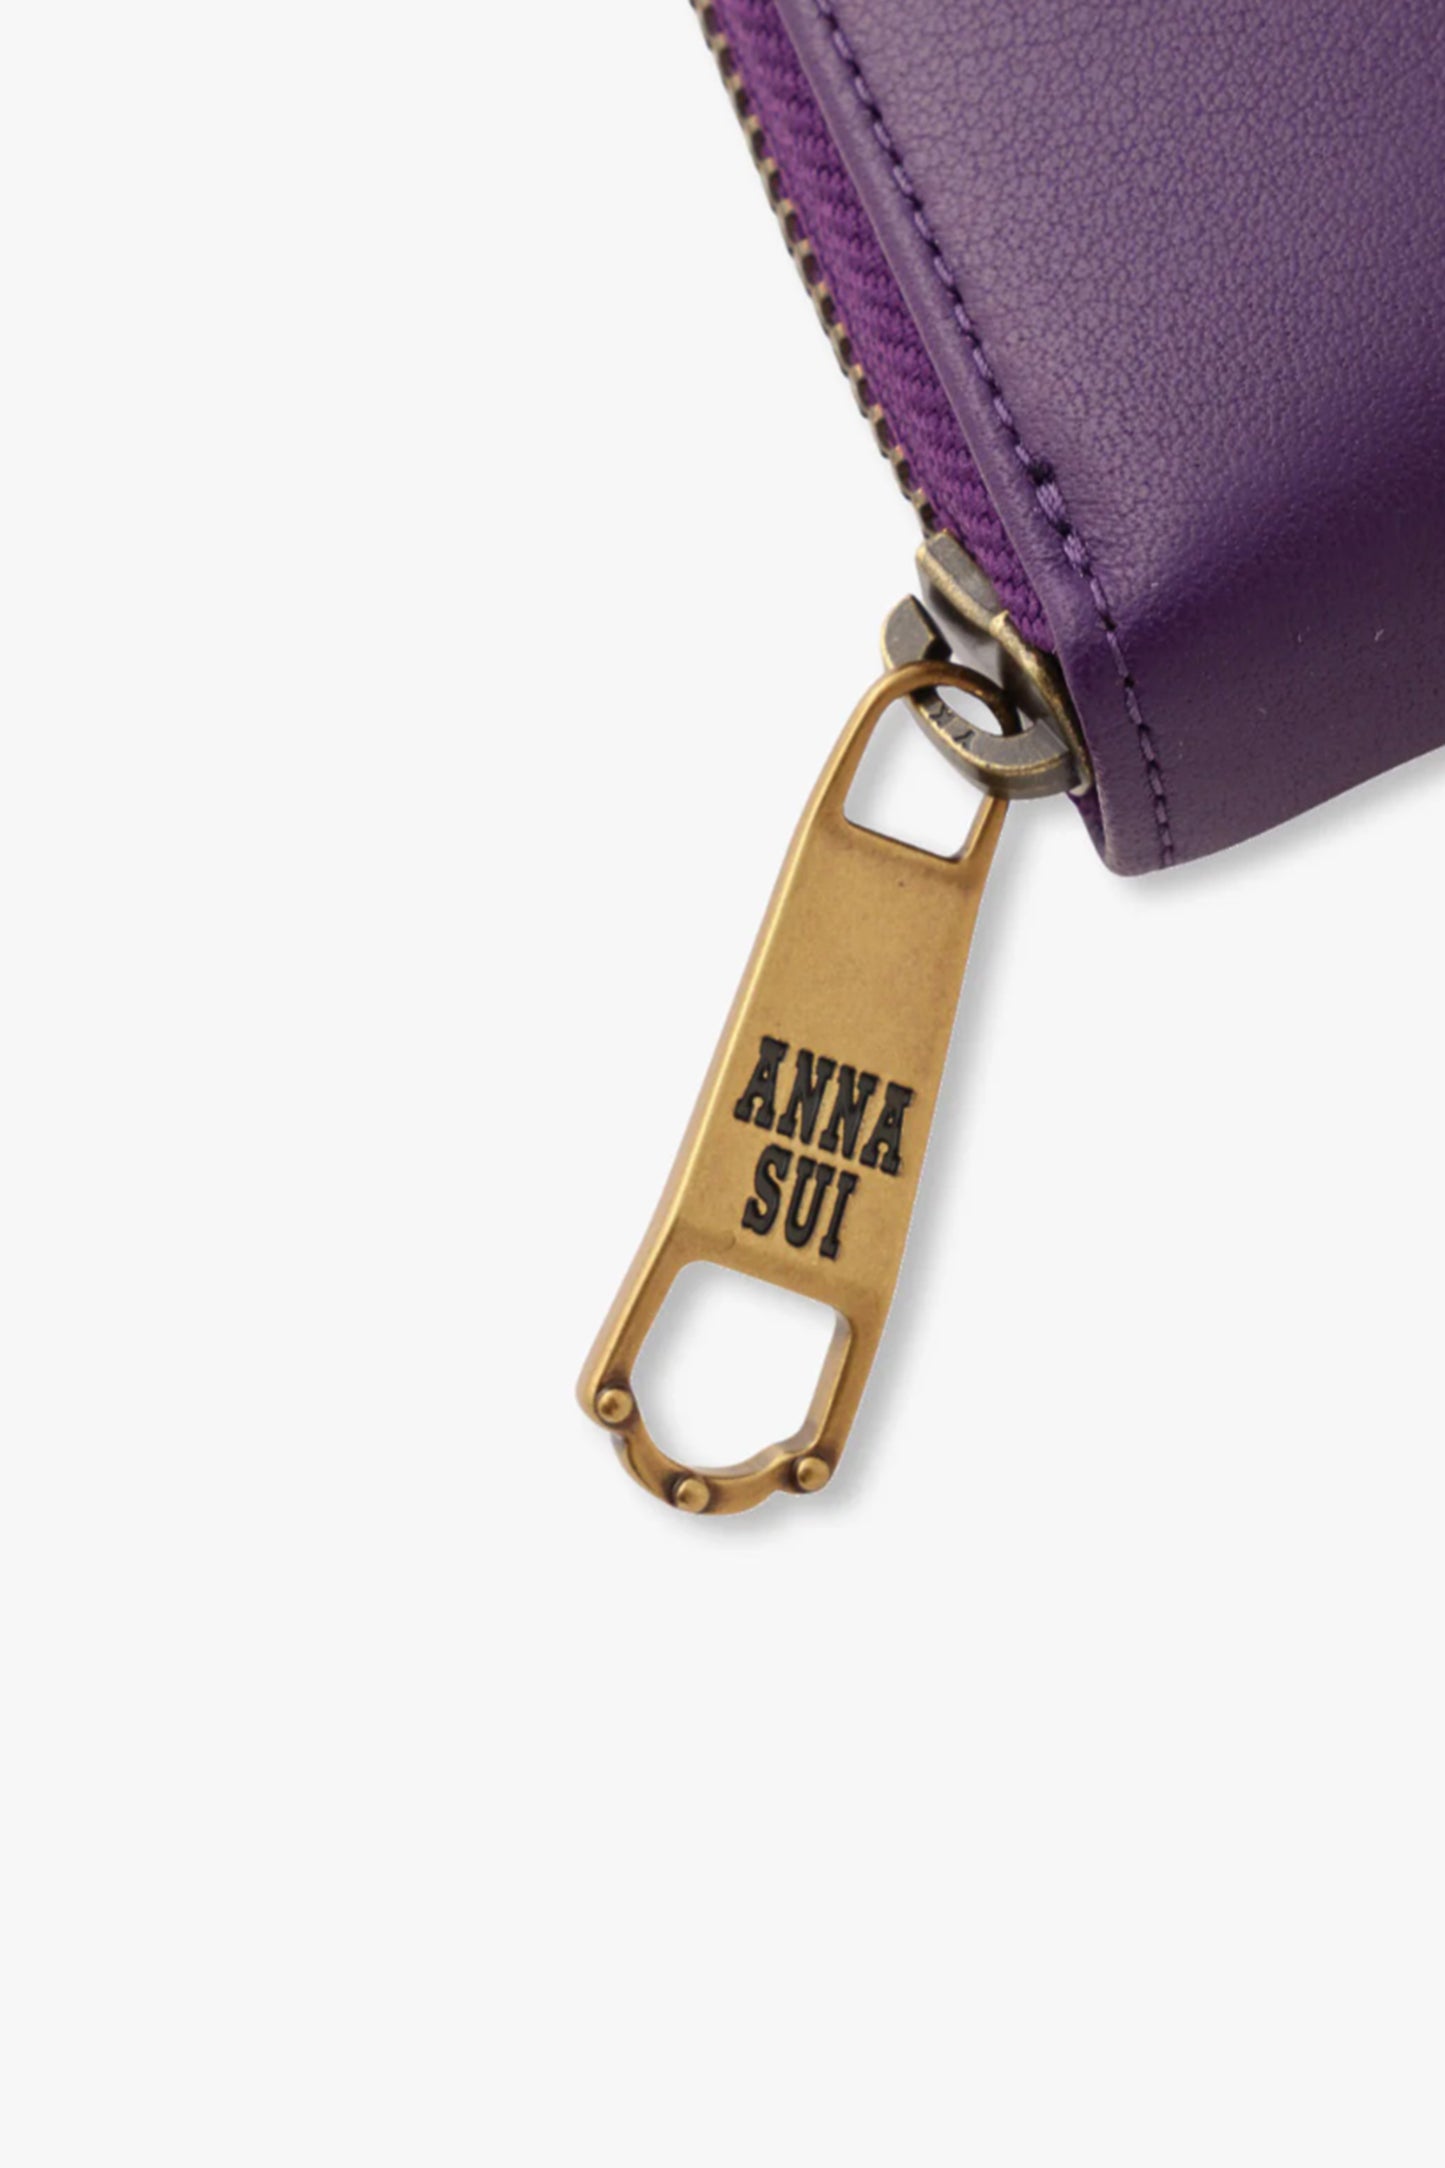 Purple Retro Button Wallet